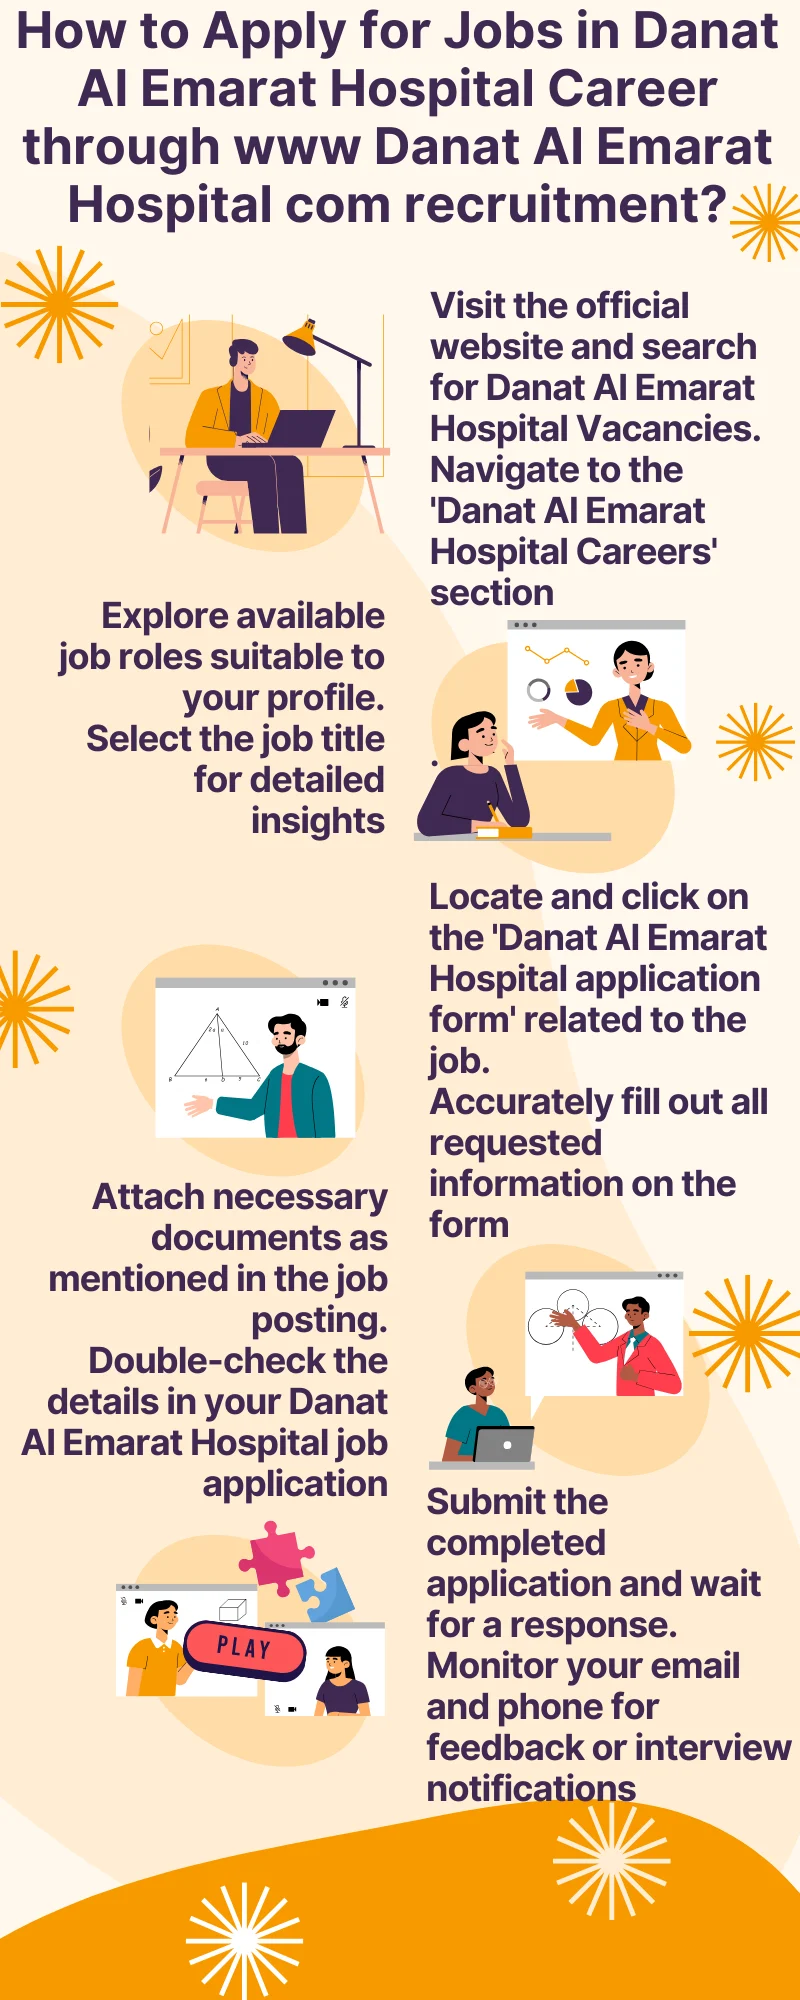 How to Apply for Jobs in Danat Al Emarat Hospital Career through www Danat Al Emarat Hospital com recruitment?